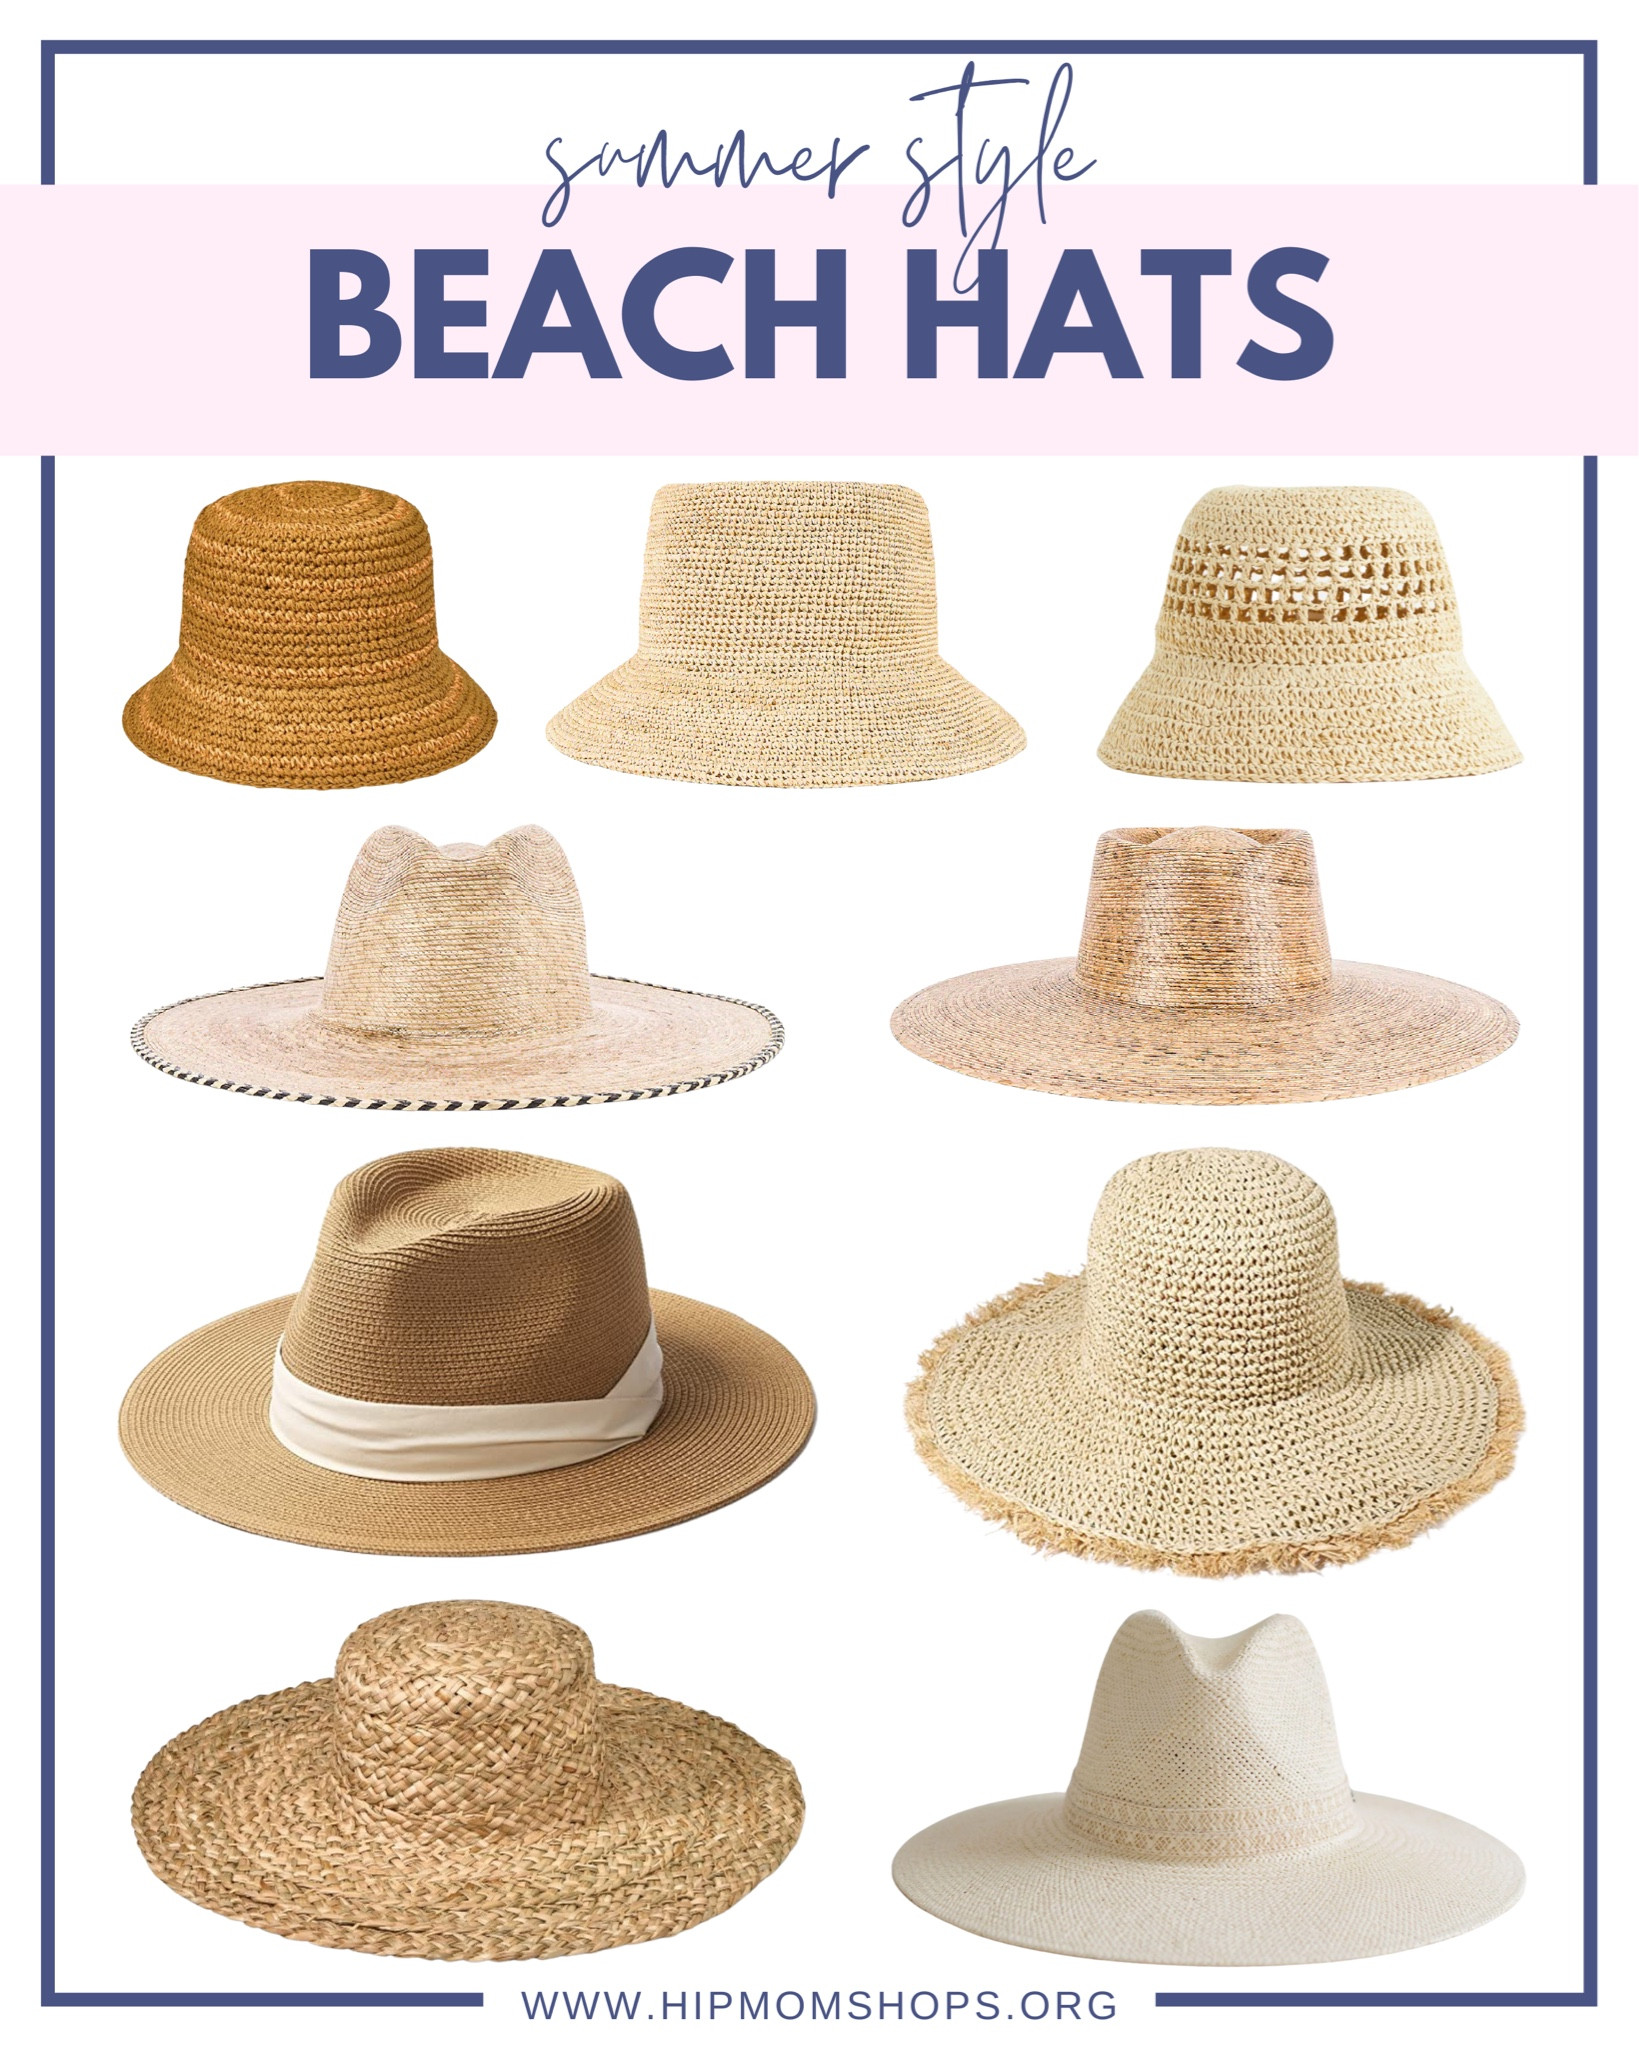 Kripyery Ladies Hat Wide Brim Sun … curated on LTK